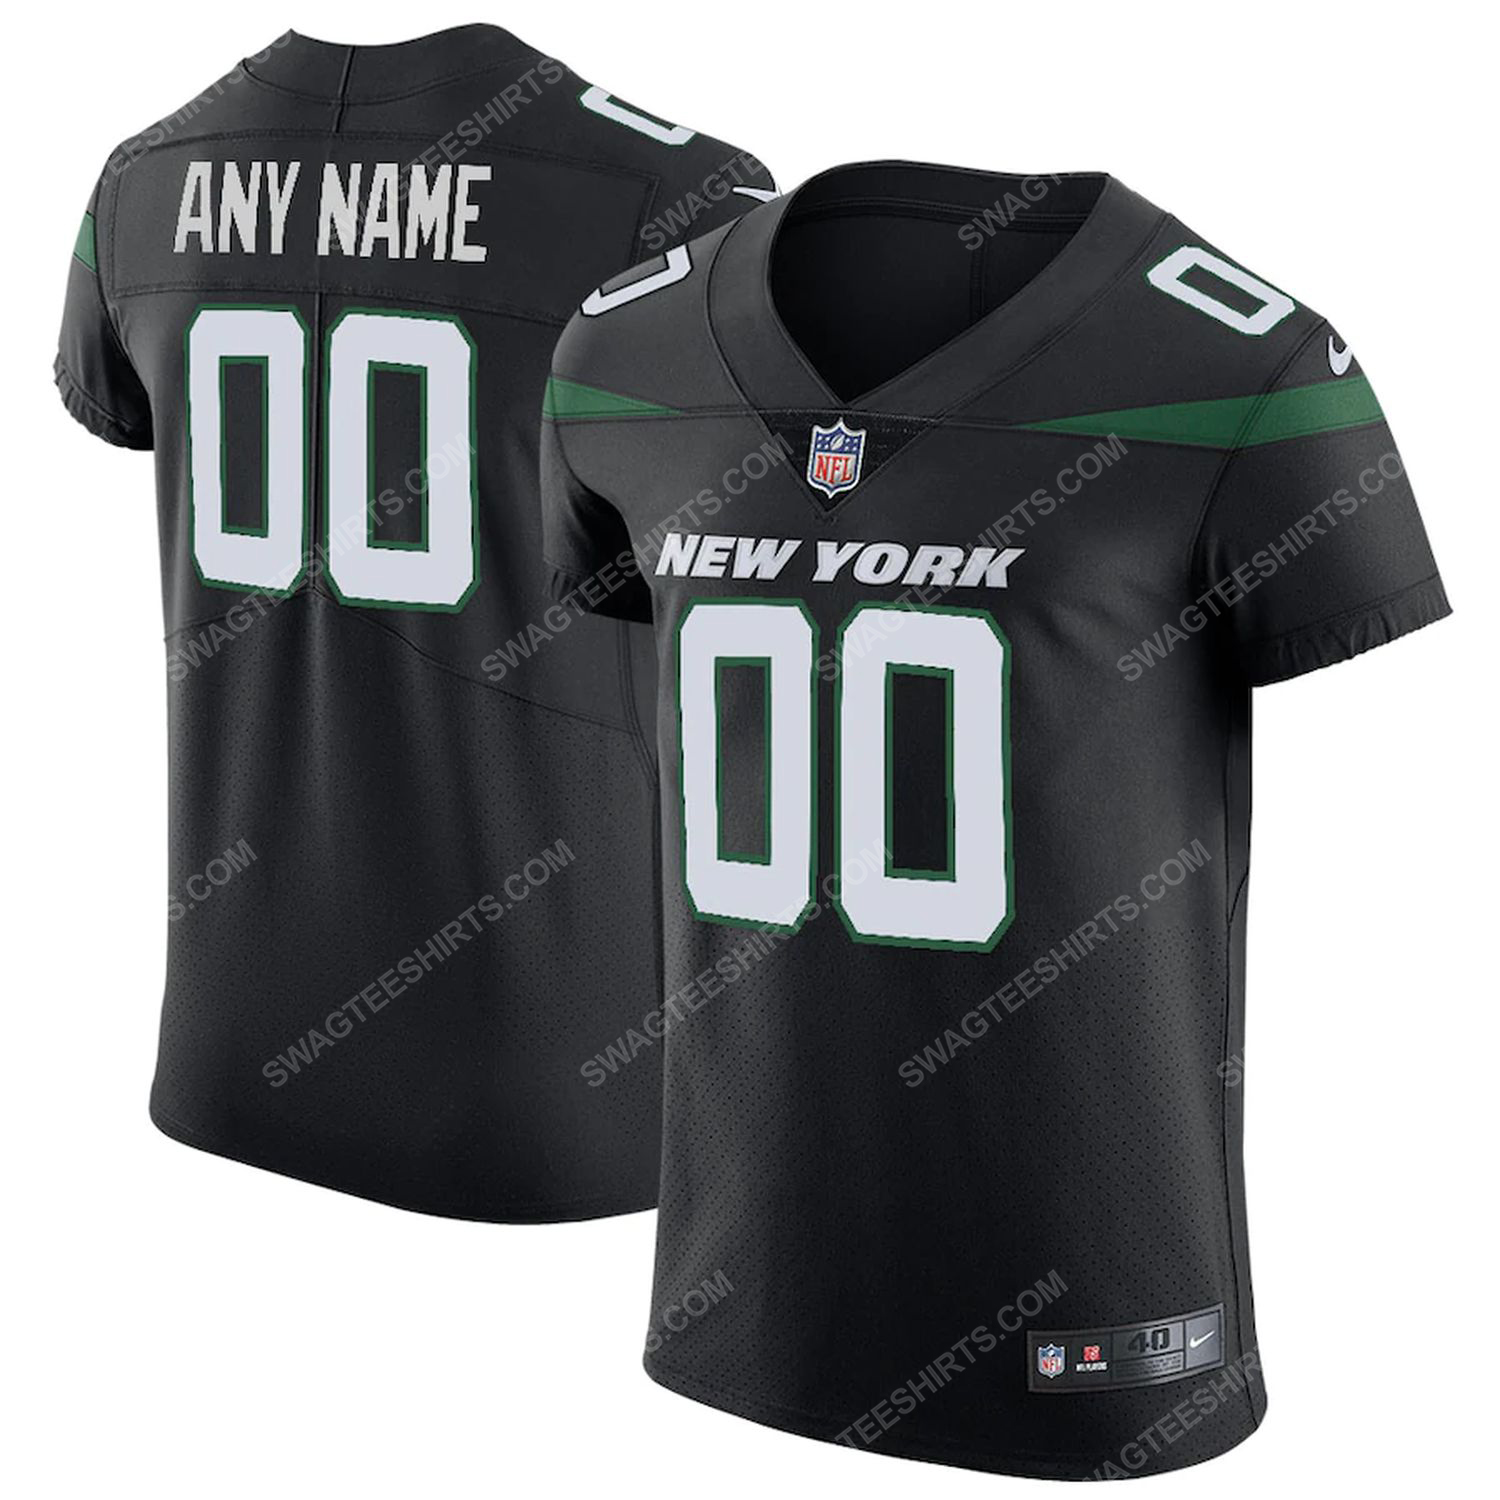 Custom new york jets all over printed football jersey - black